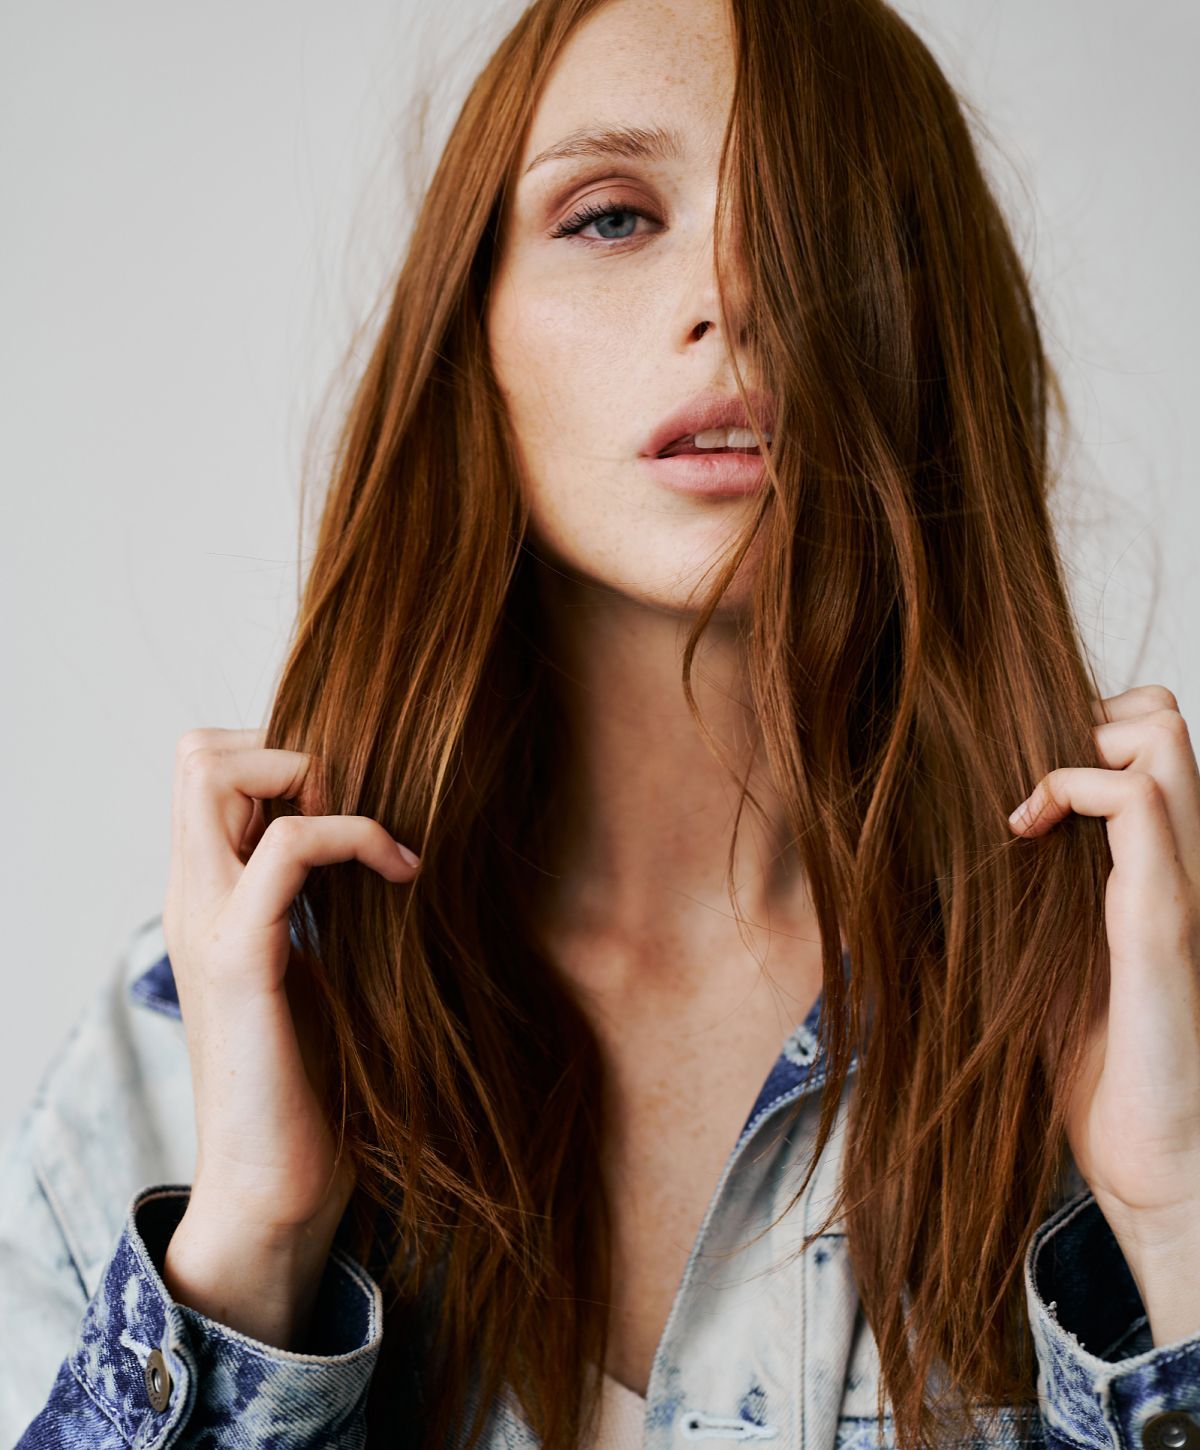 Savannah Female Pattern Hair Loss Model with red hair